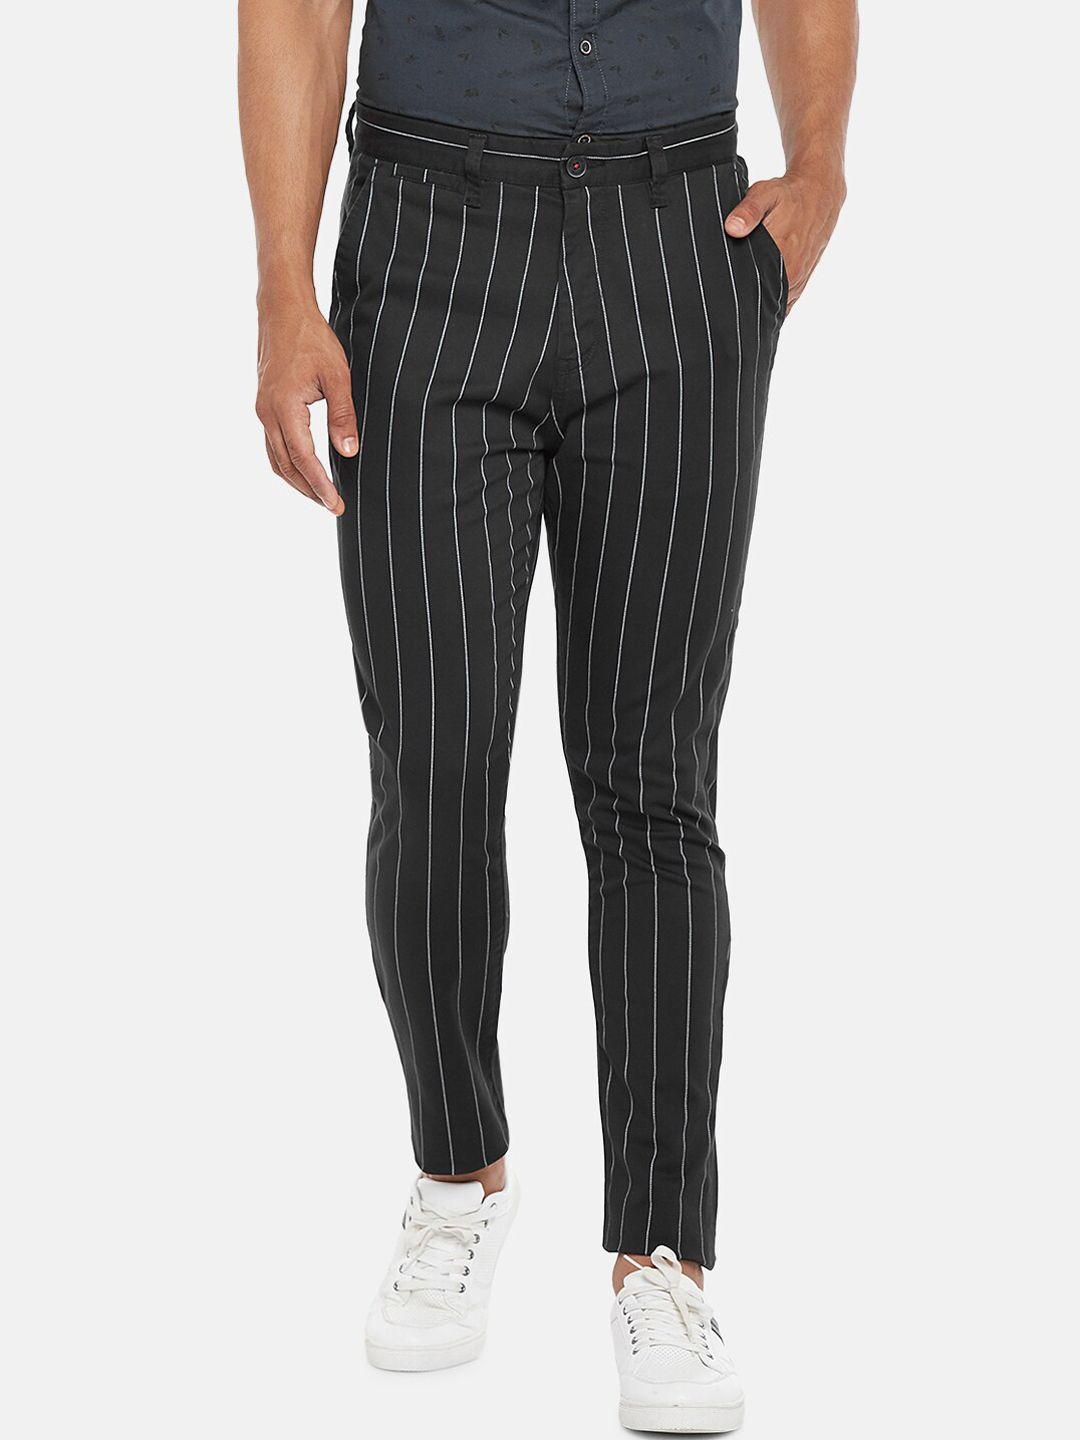 urban ranger by pantaloons men black striped slim fit trousers